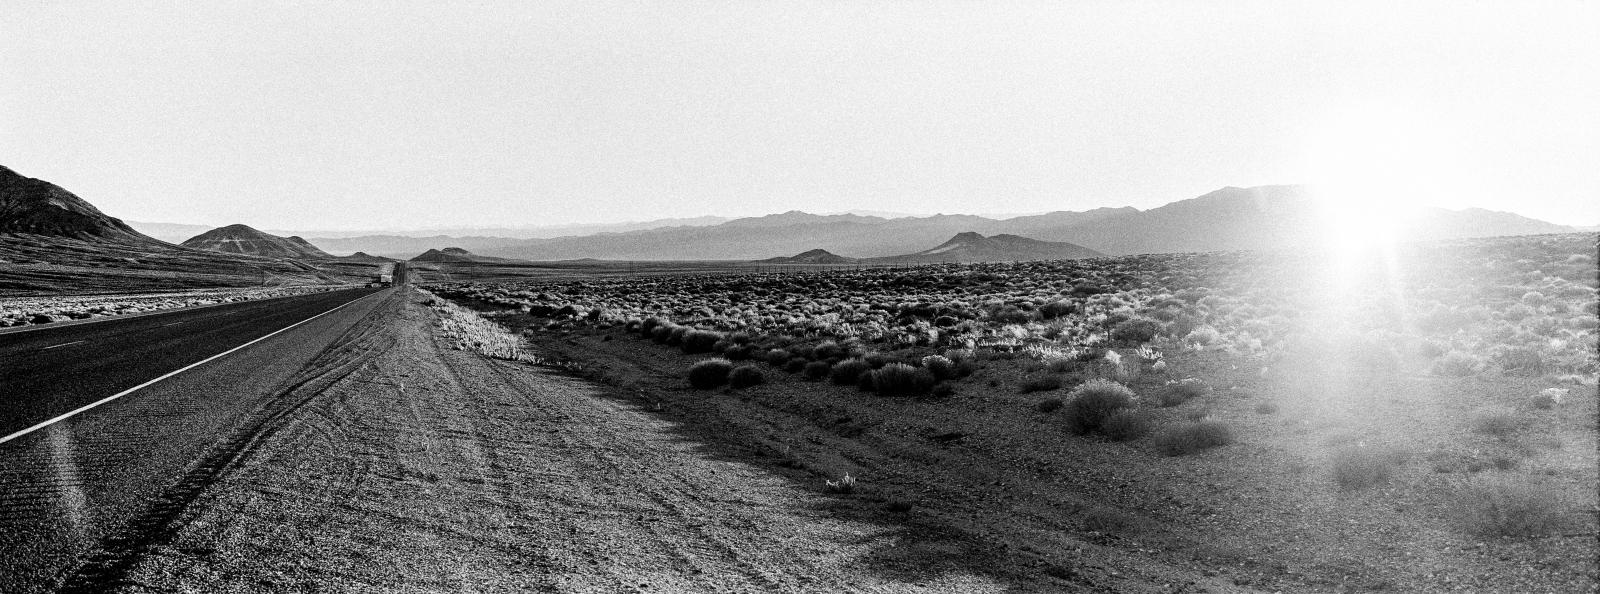 Desert Southwest USA 04-0921-901 | Buy this image